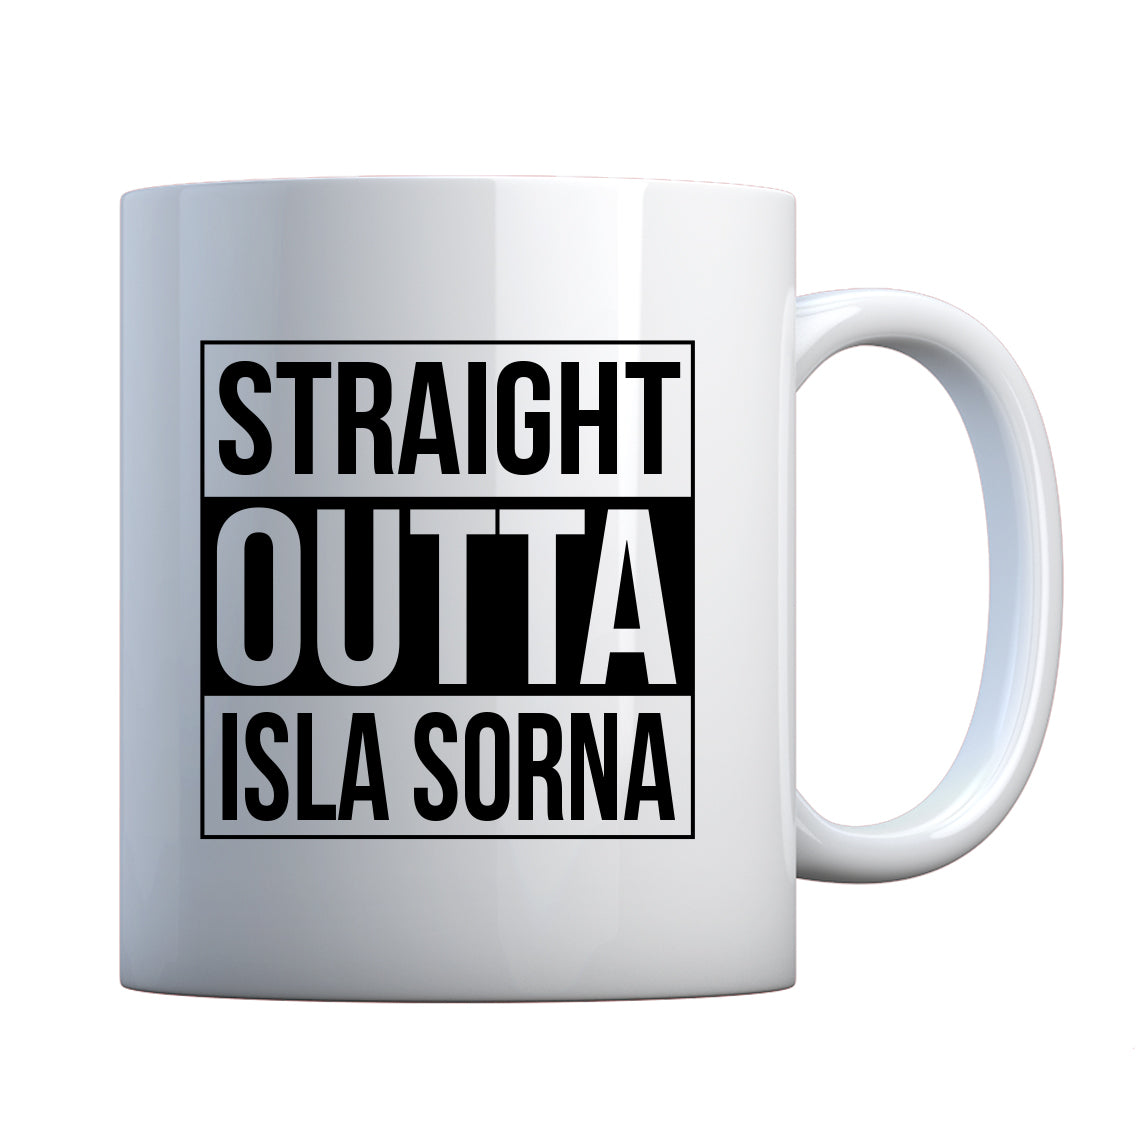 Mug Straight Outta Isla Sorna Ceramic Gift Mug